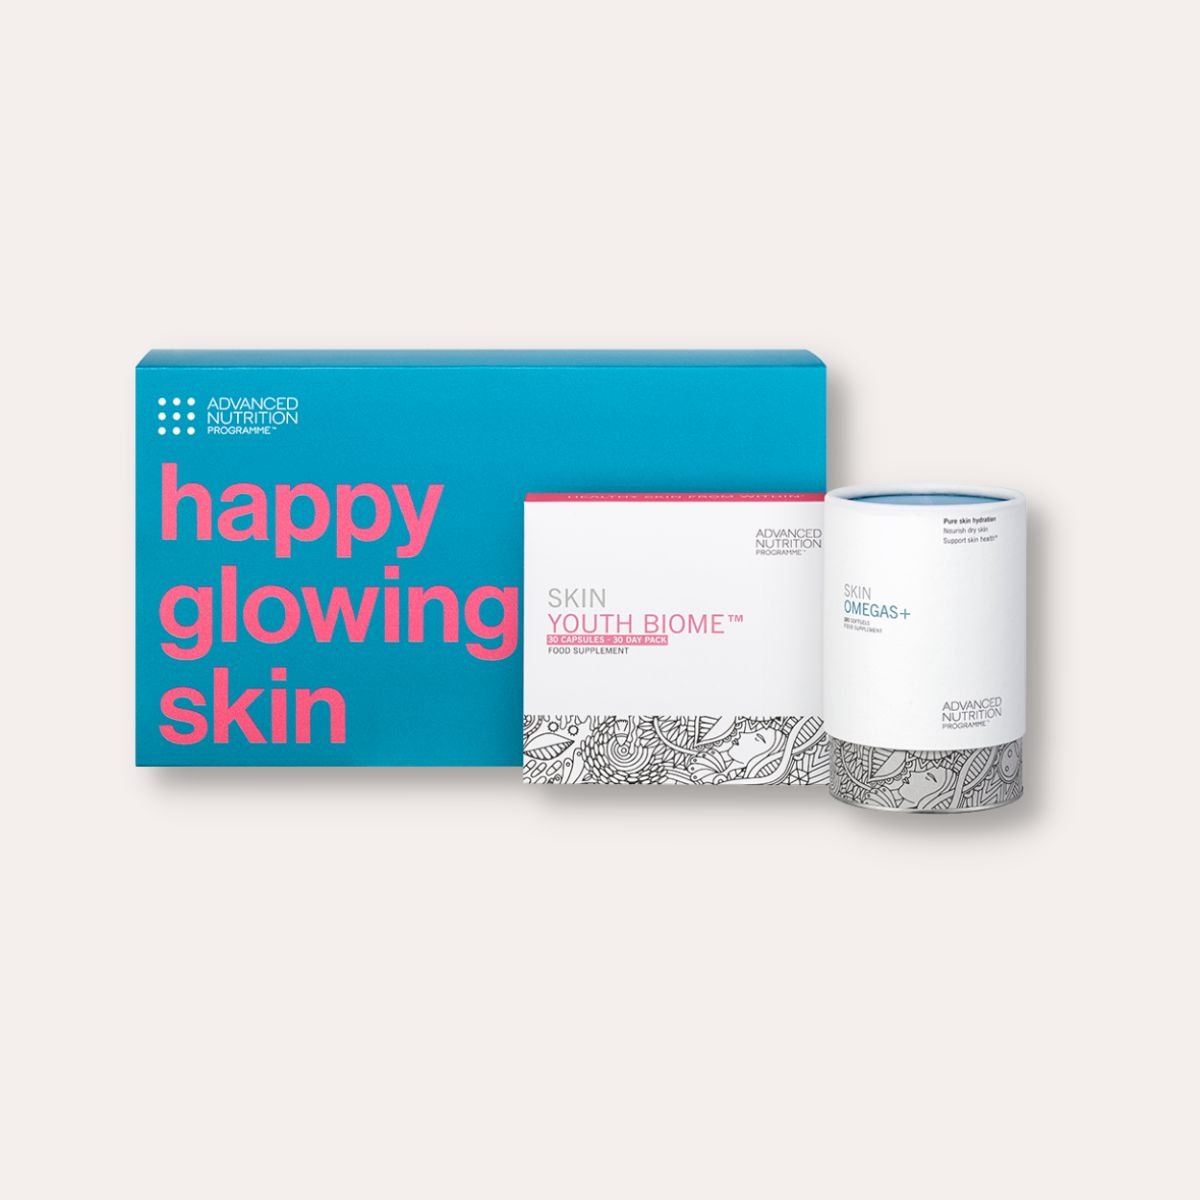 Happy Glowing Skin - Sara Lorentsen Skin Expert